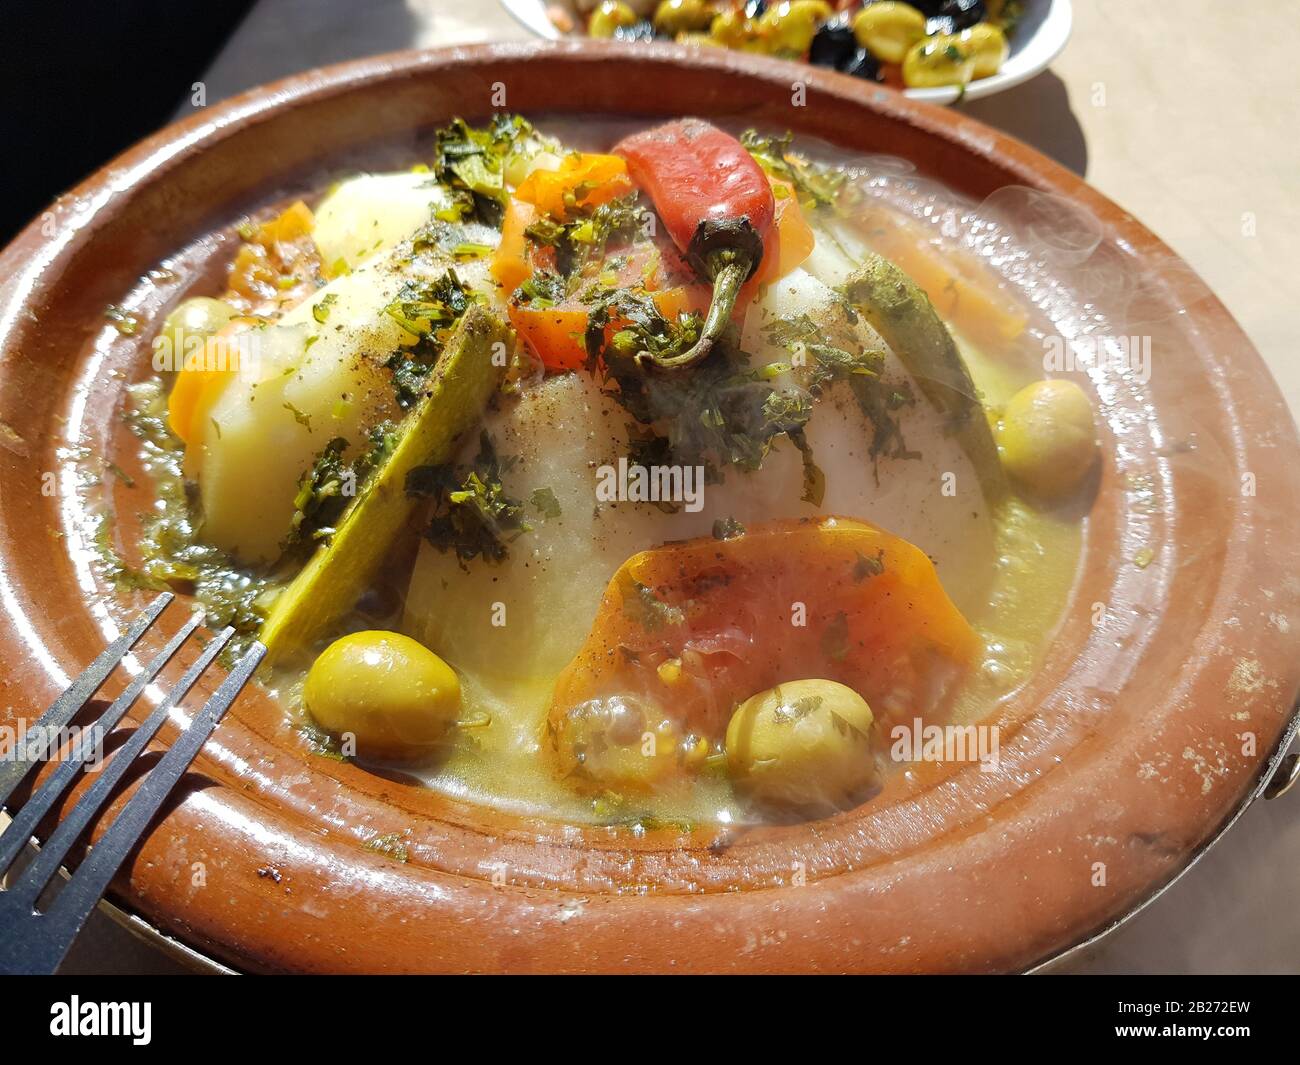 Olla vegetariana fotografías e imágenes de alta resolución - Alamy